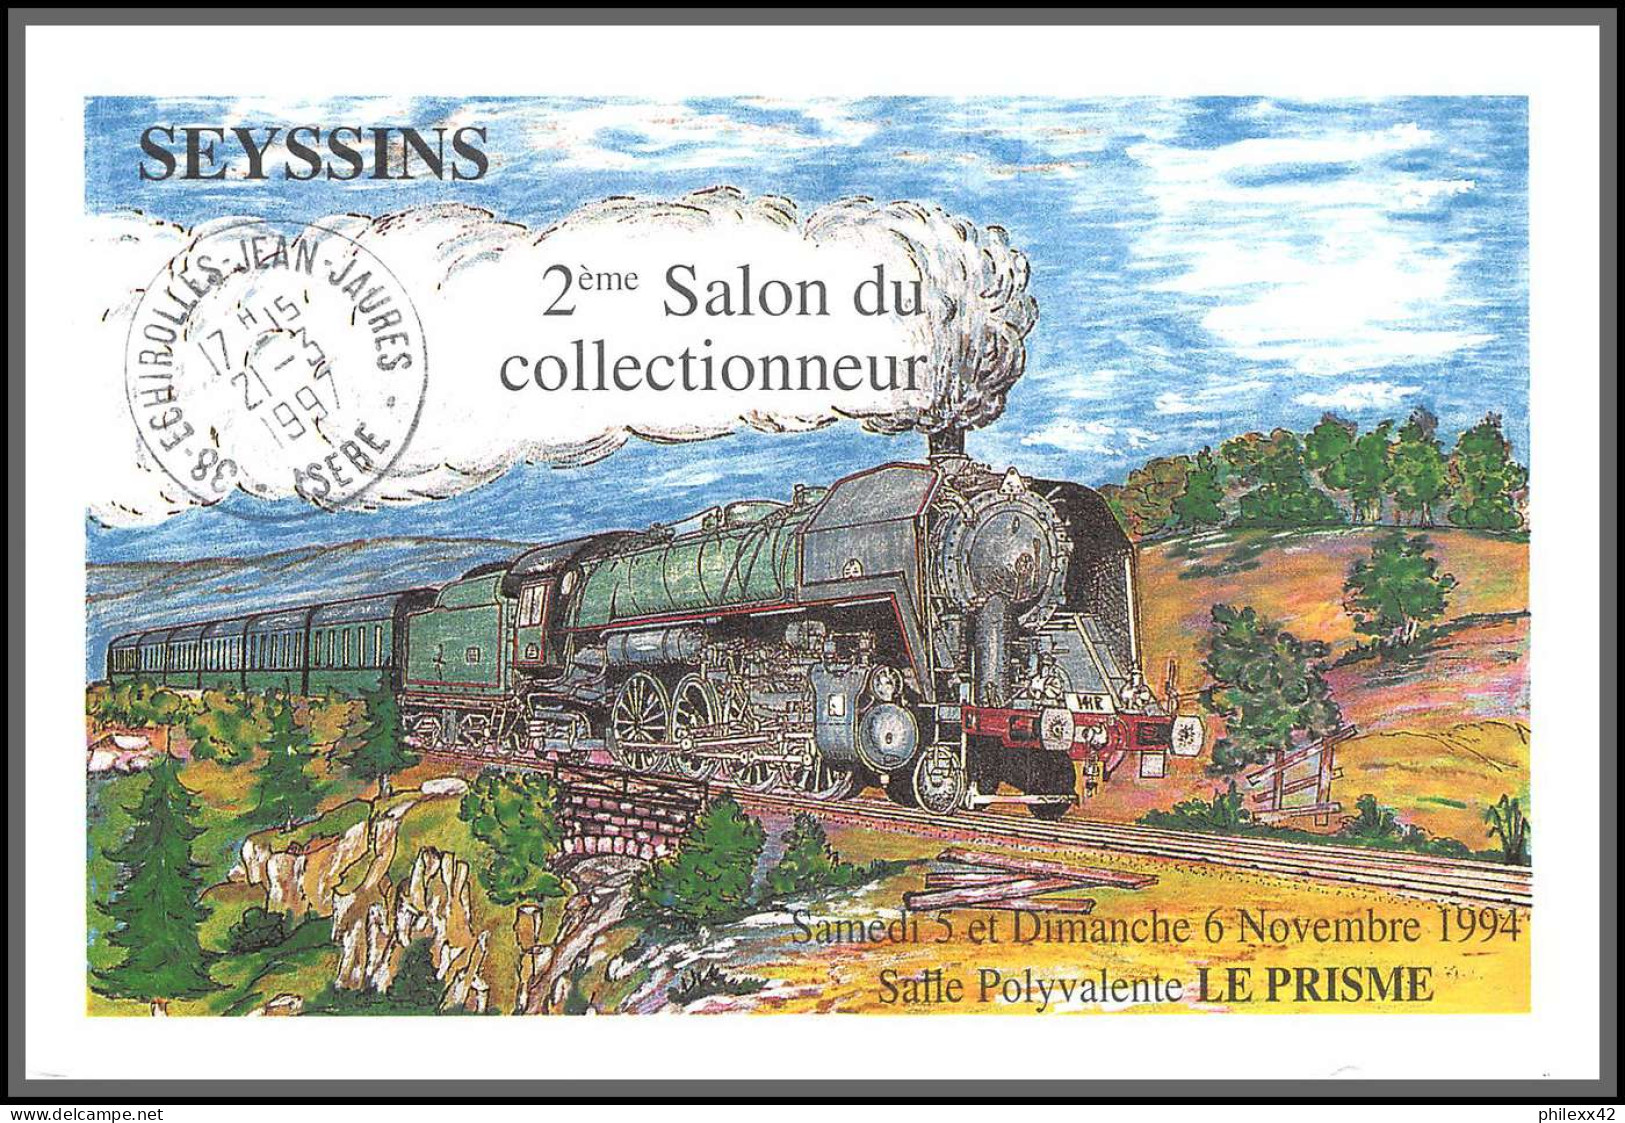 74321 Mixte Atm Briat 17/3/1997 Combani Mayotte Echirolles Isère France Carte Postcard Colonies  - Covers & Documents